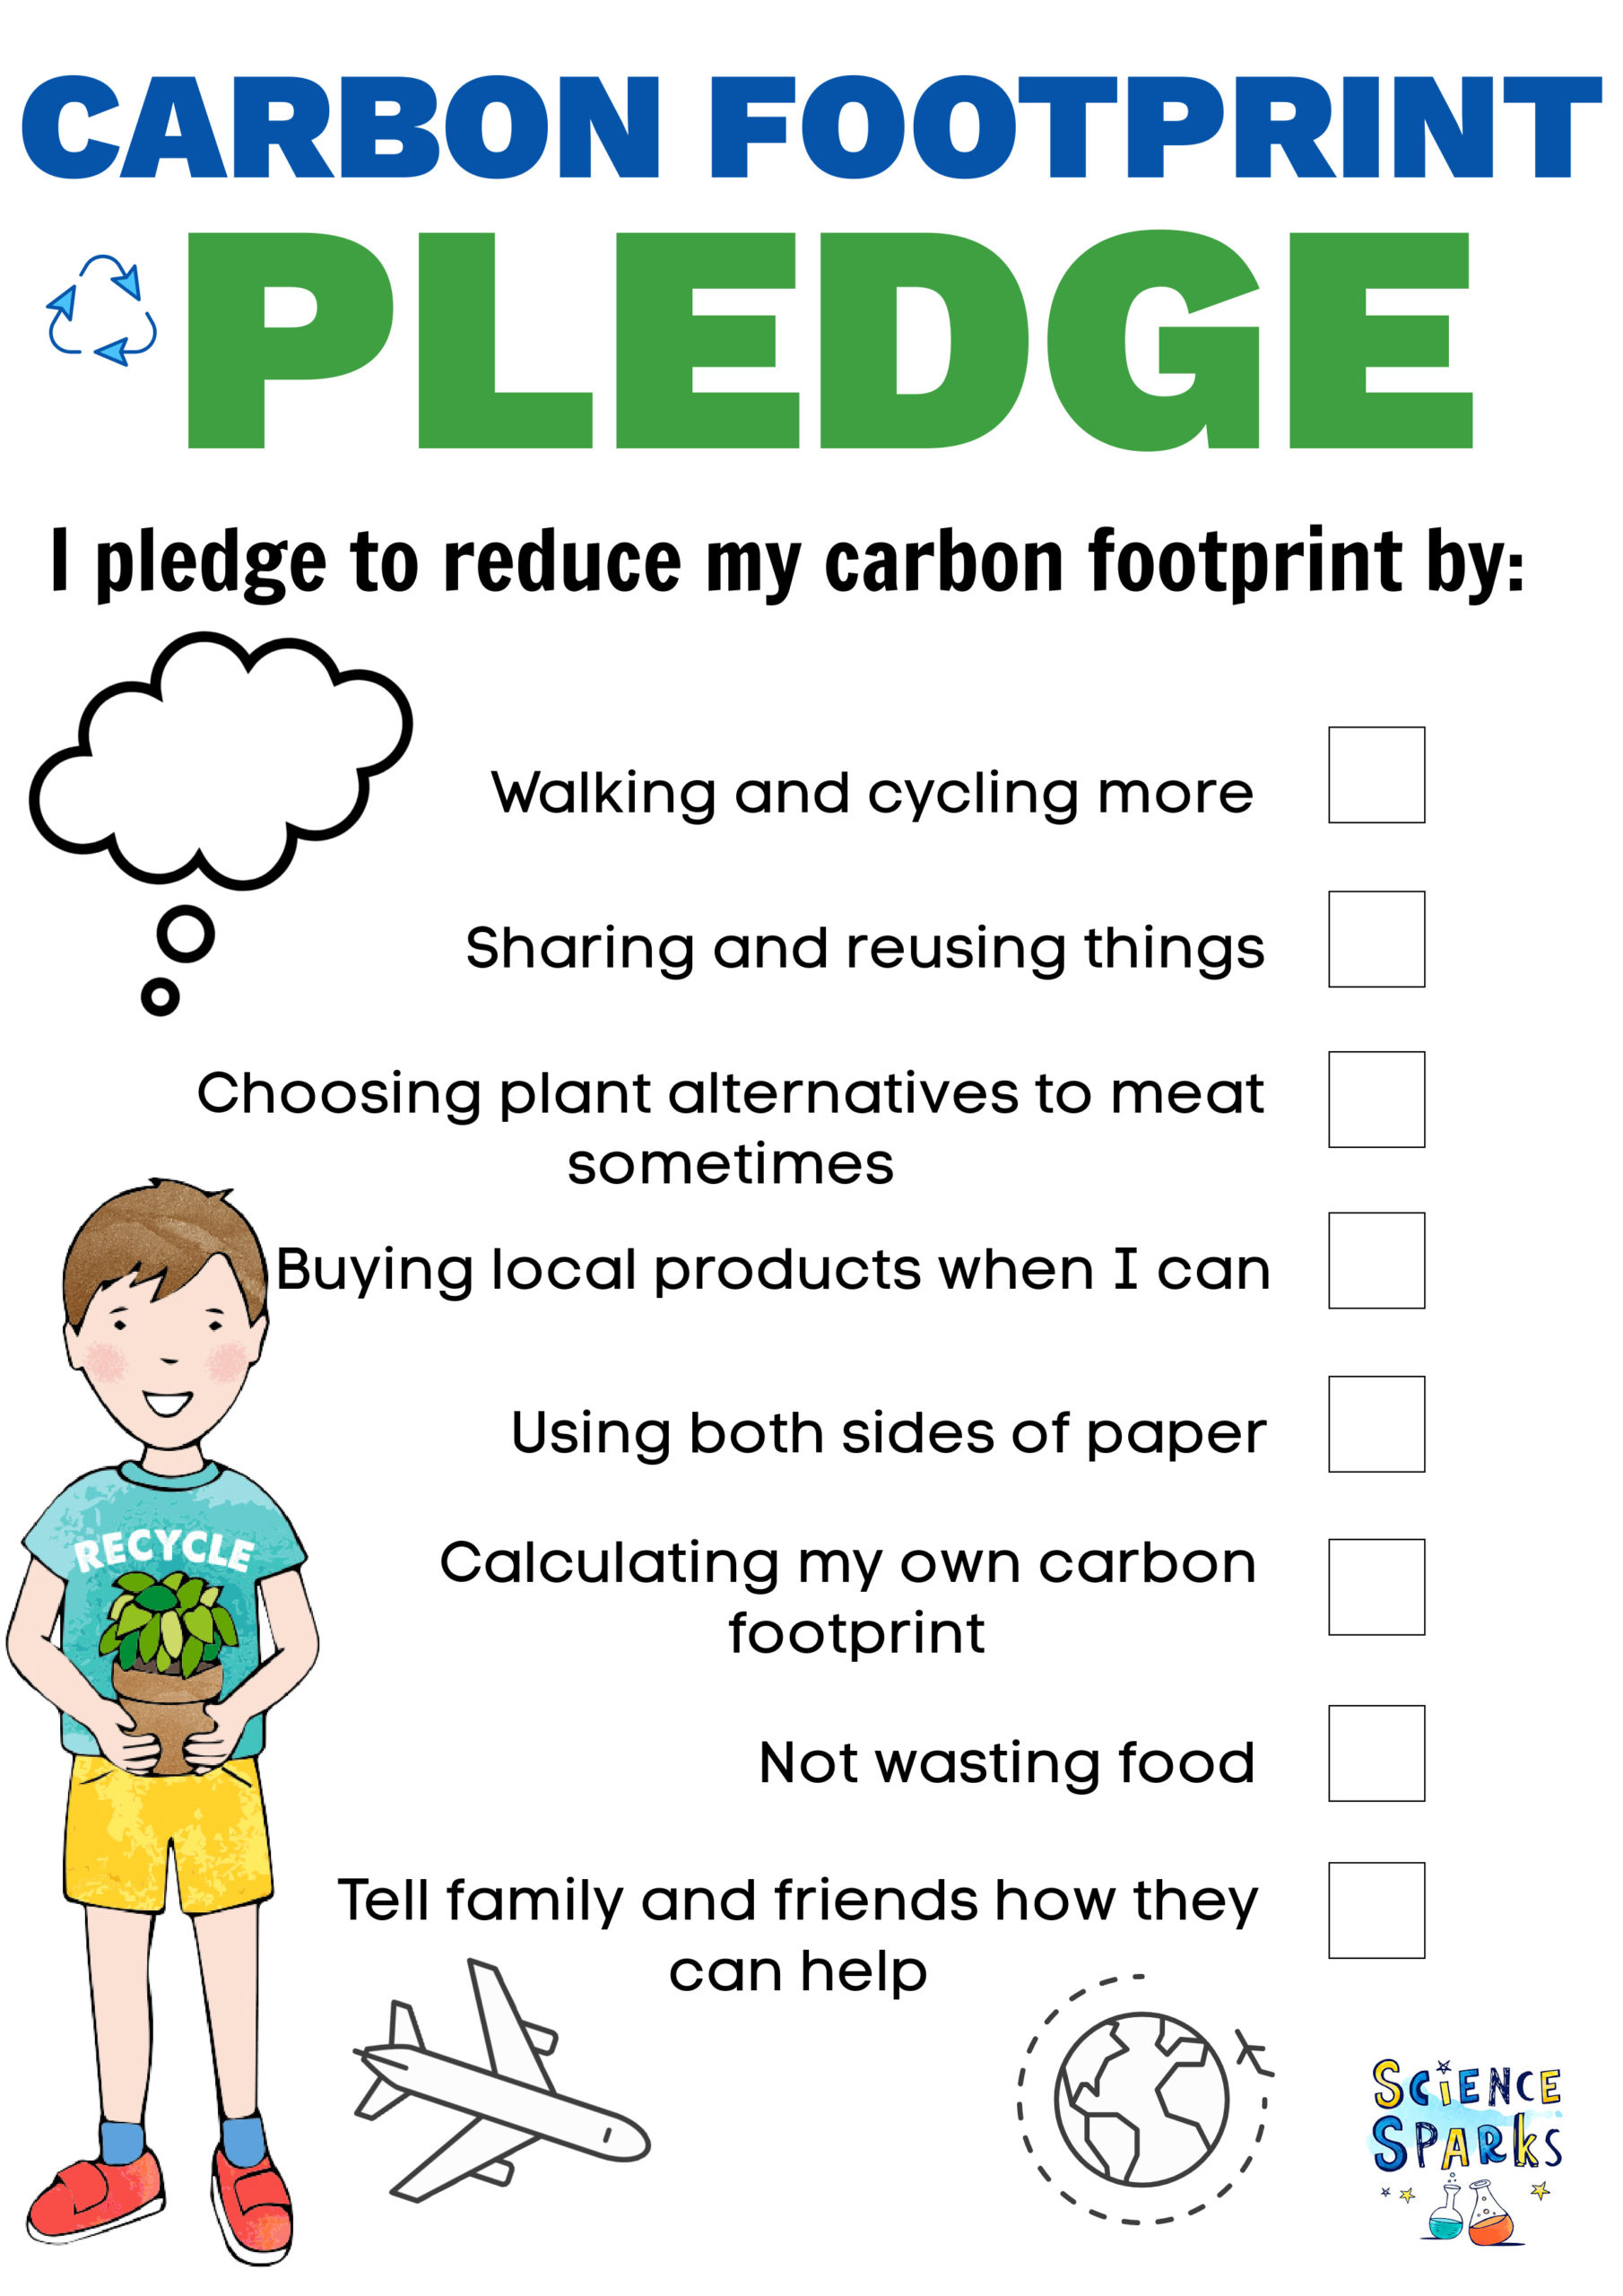 Carbon pledge printable sheet